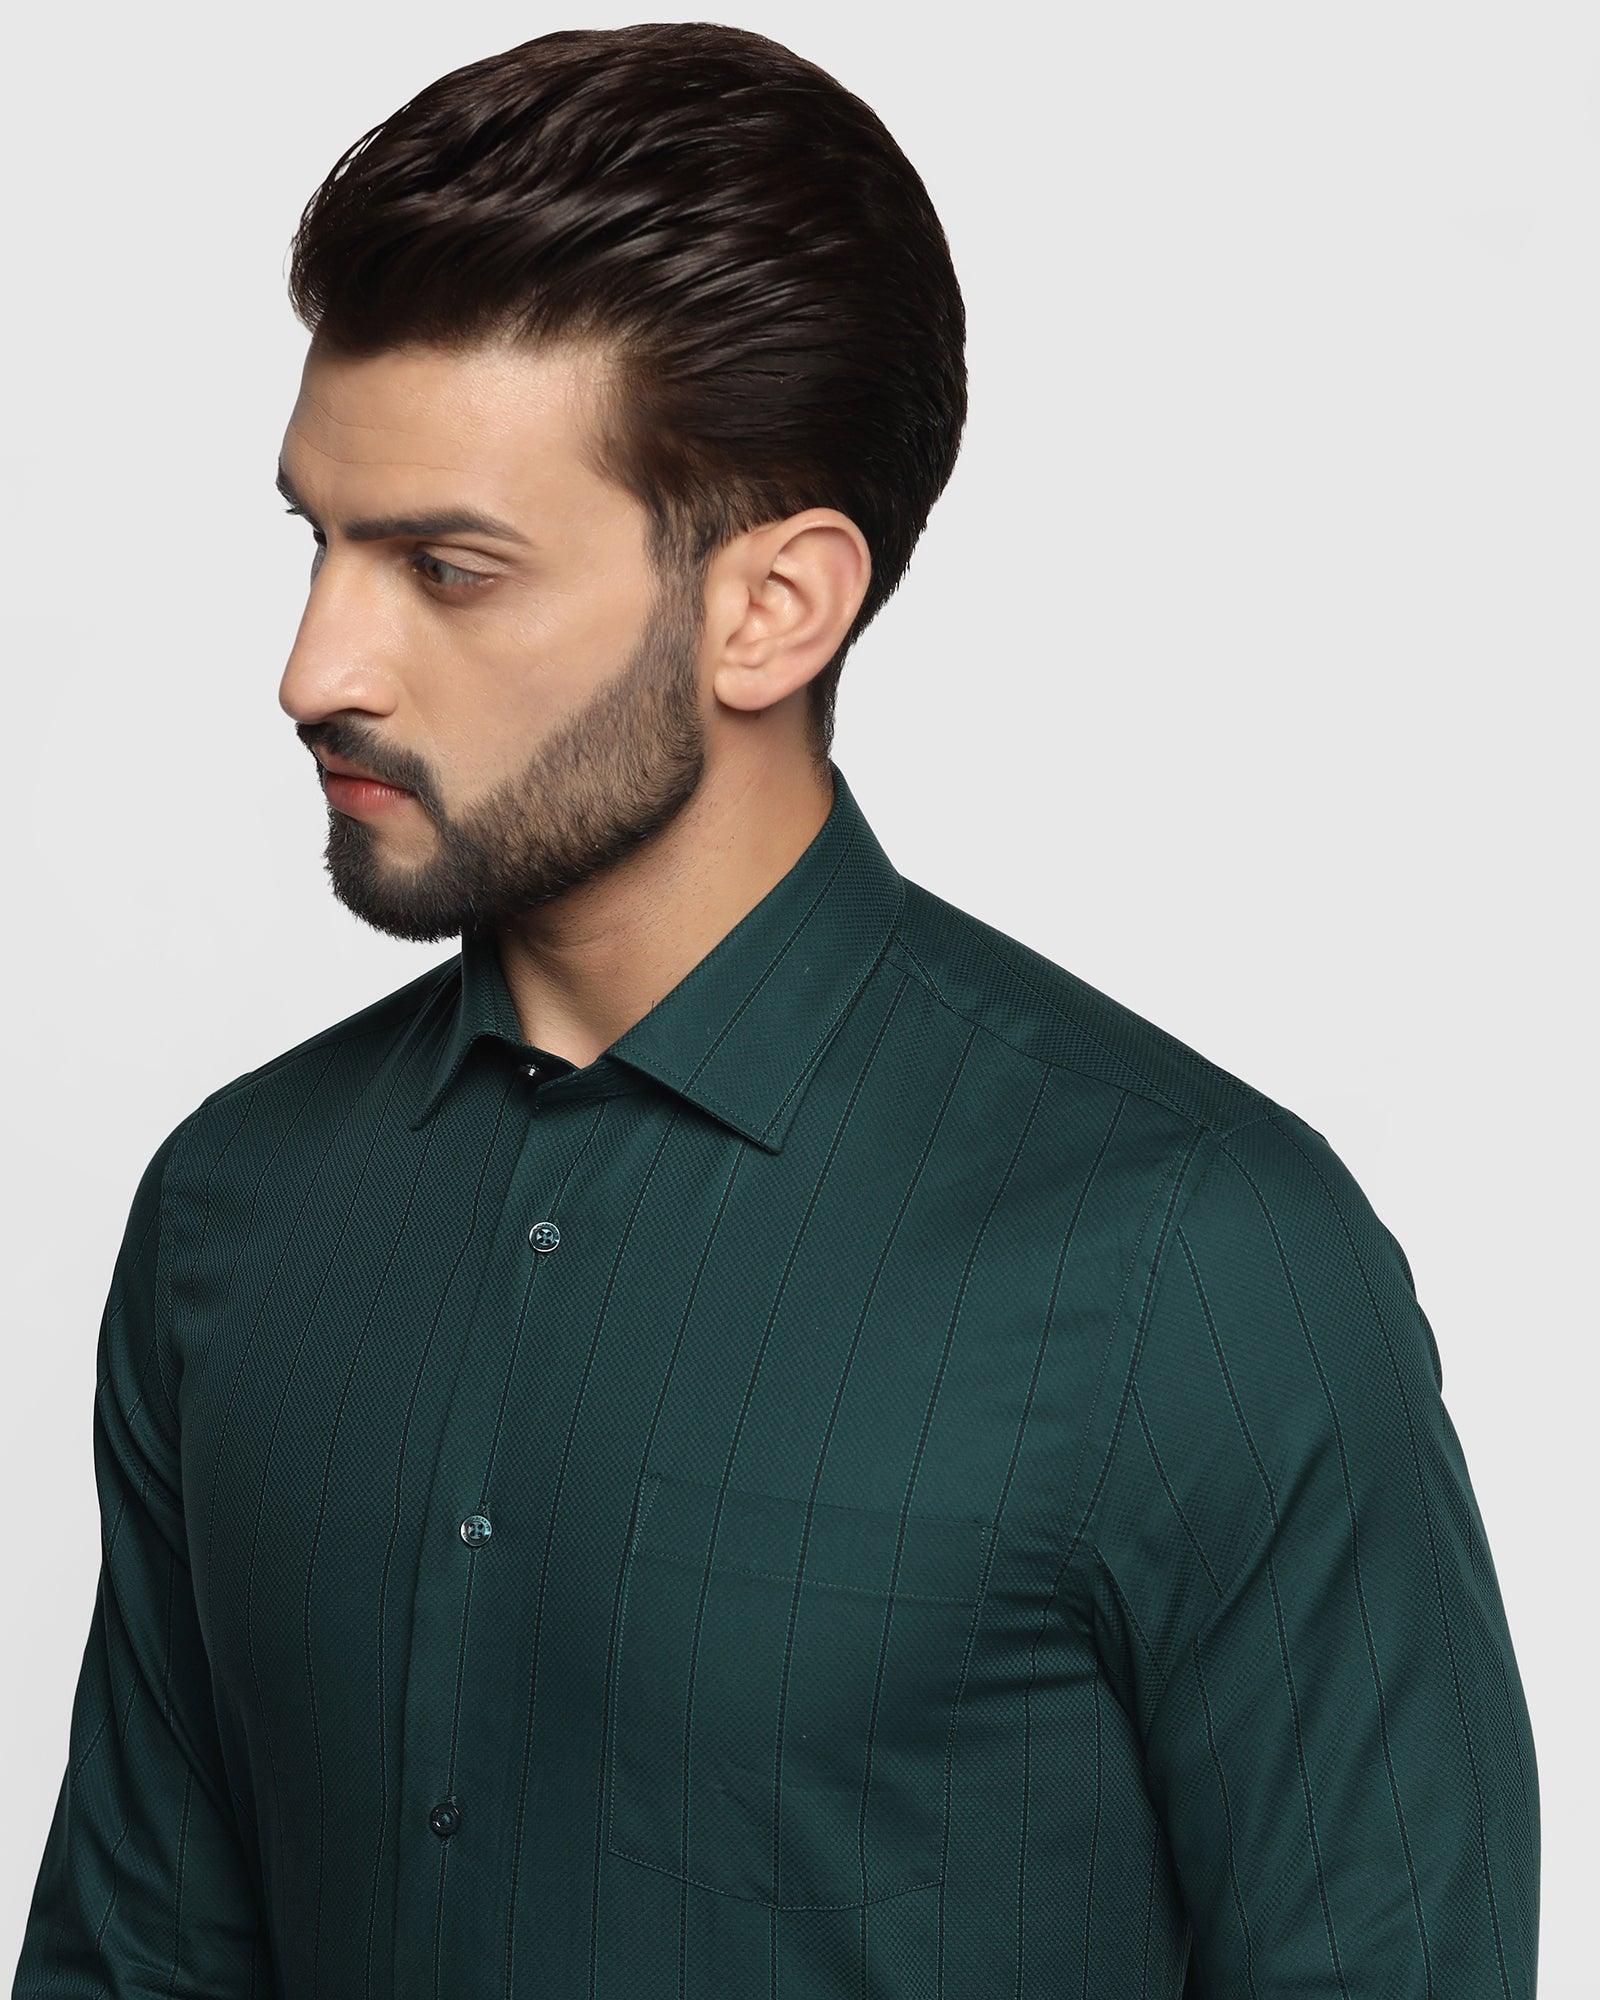 Formal Bottle Green Striped Shirt - Merty